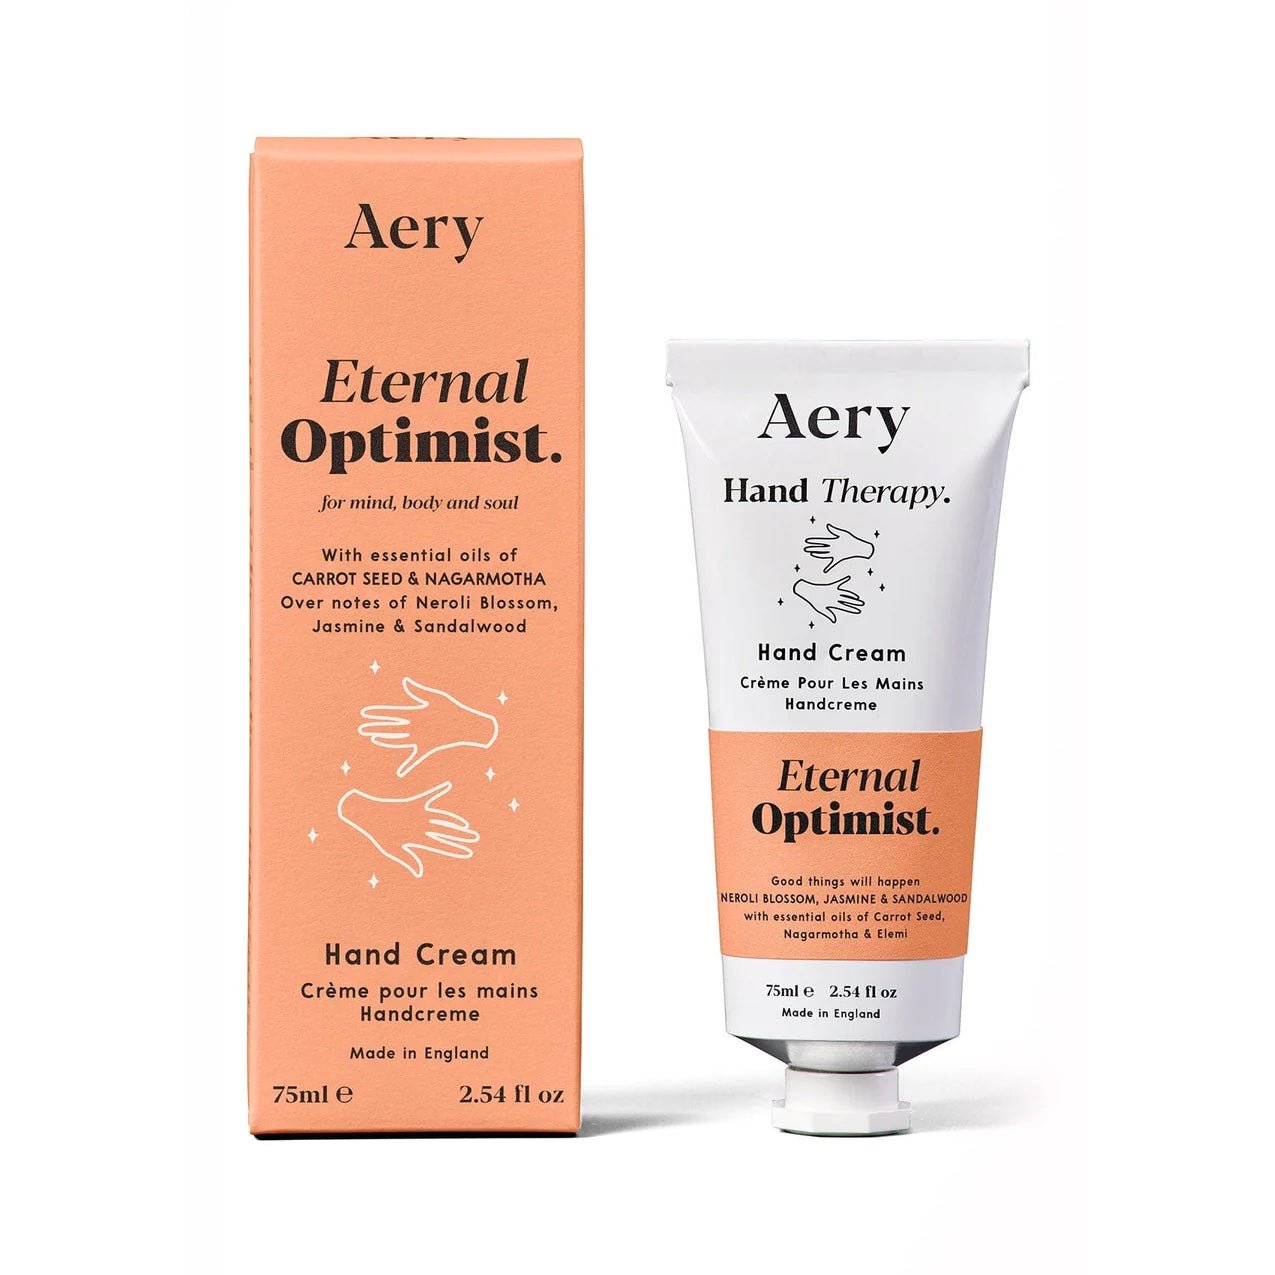 Aery Eternal Optimist Hand Cream - THE BRISTOL ARTISAN